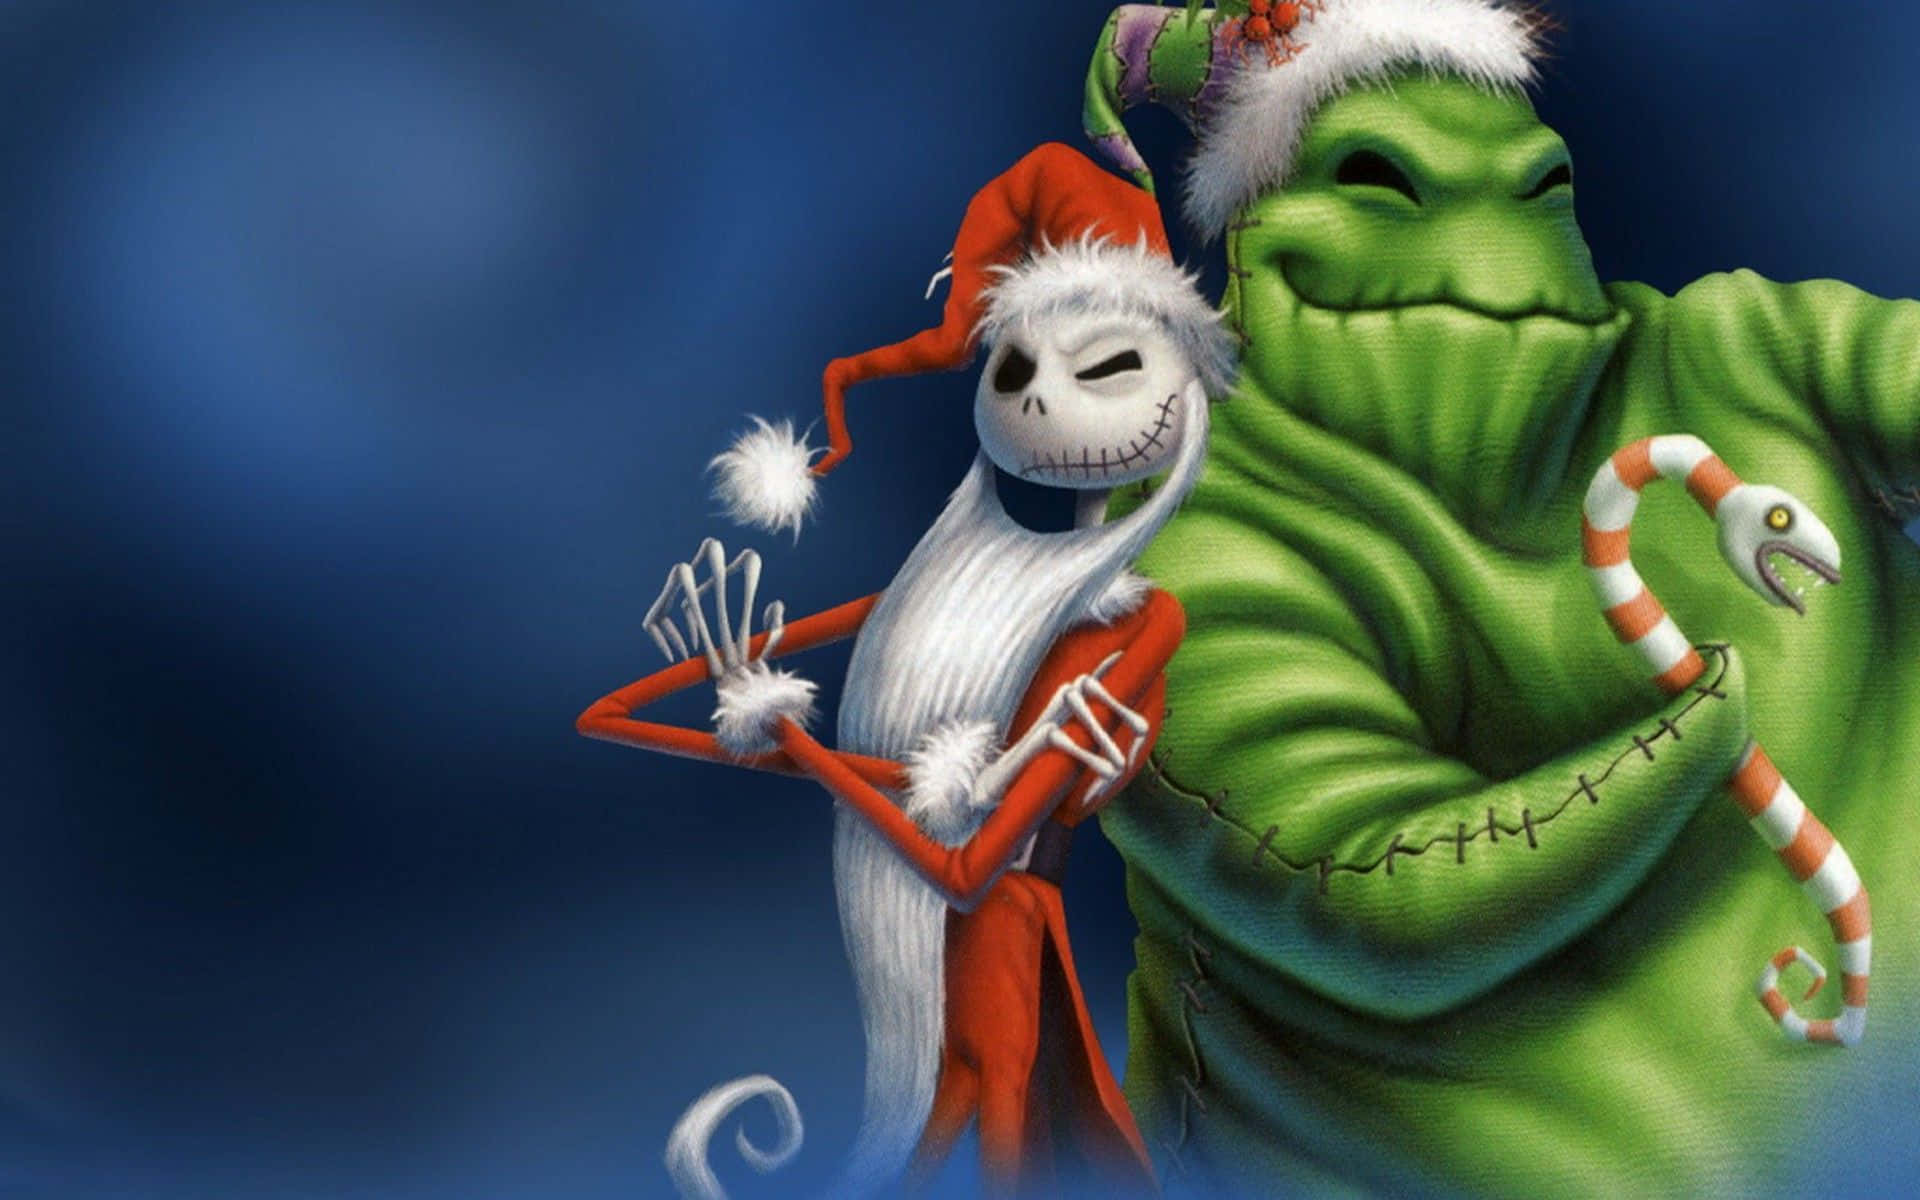 Hilarious Christmas Celebration with Santa and Reindeer